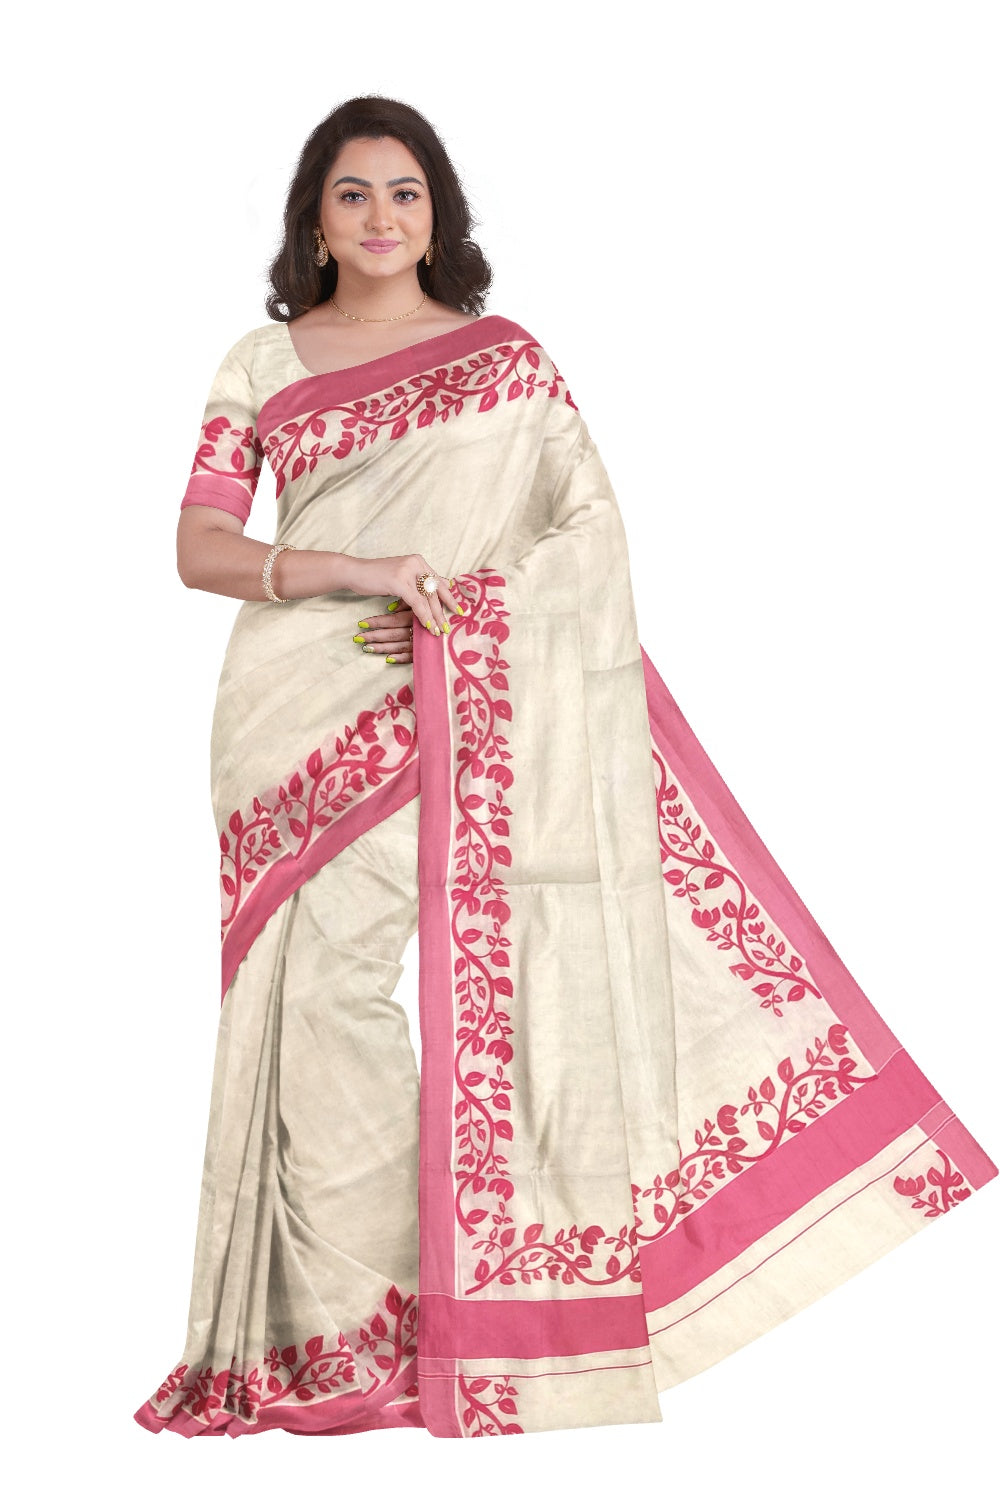 Southloom Original Design Kerala Saree with Pink Floral Vines Block Print